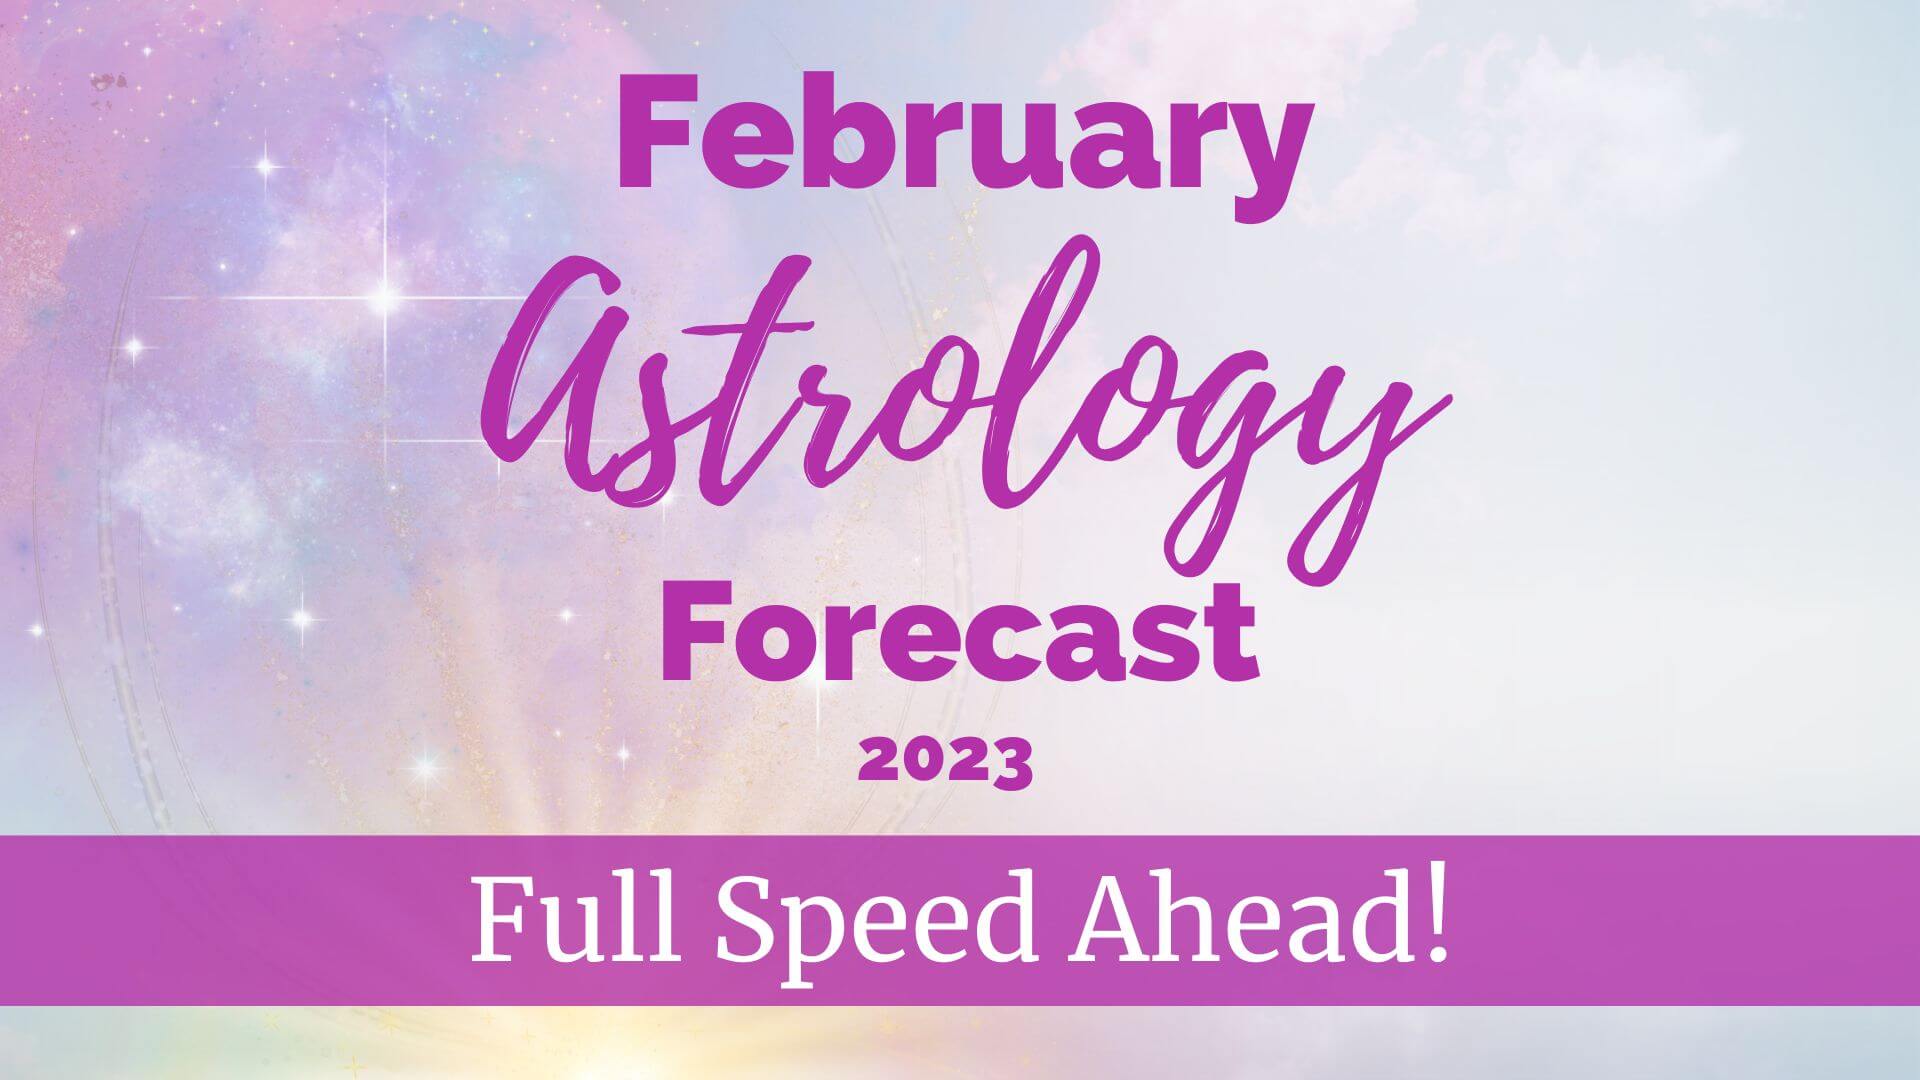 February 2023 Forecast